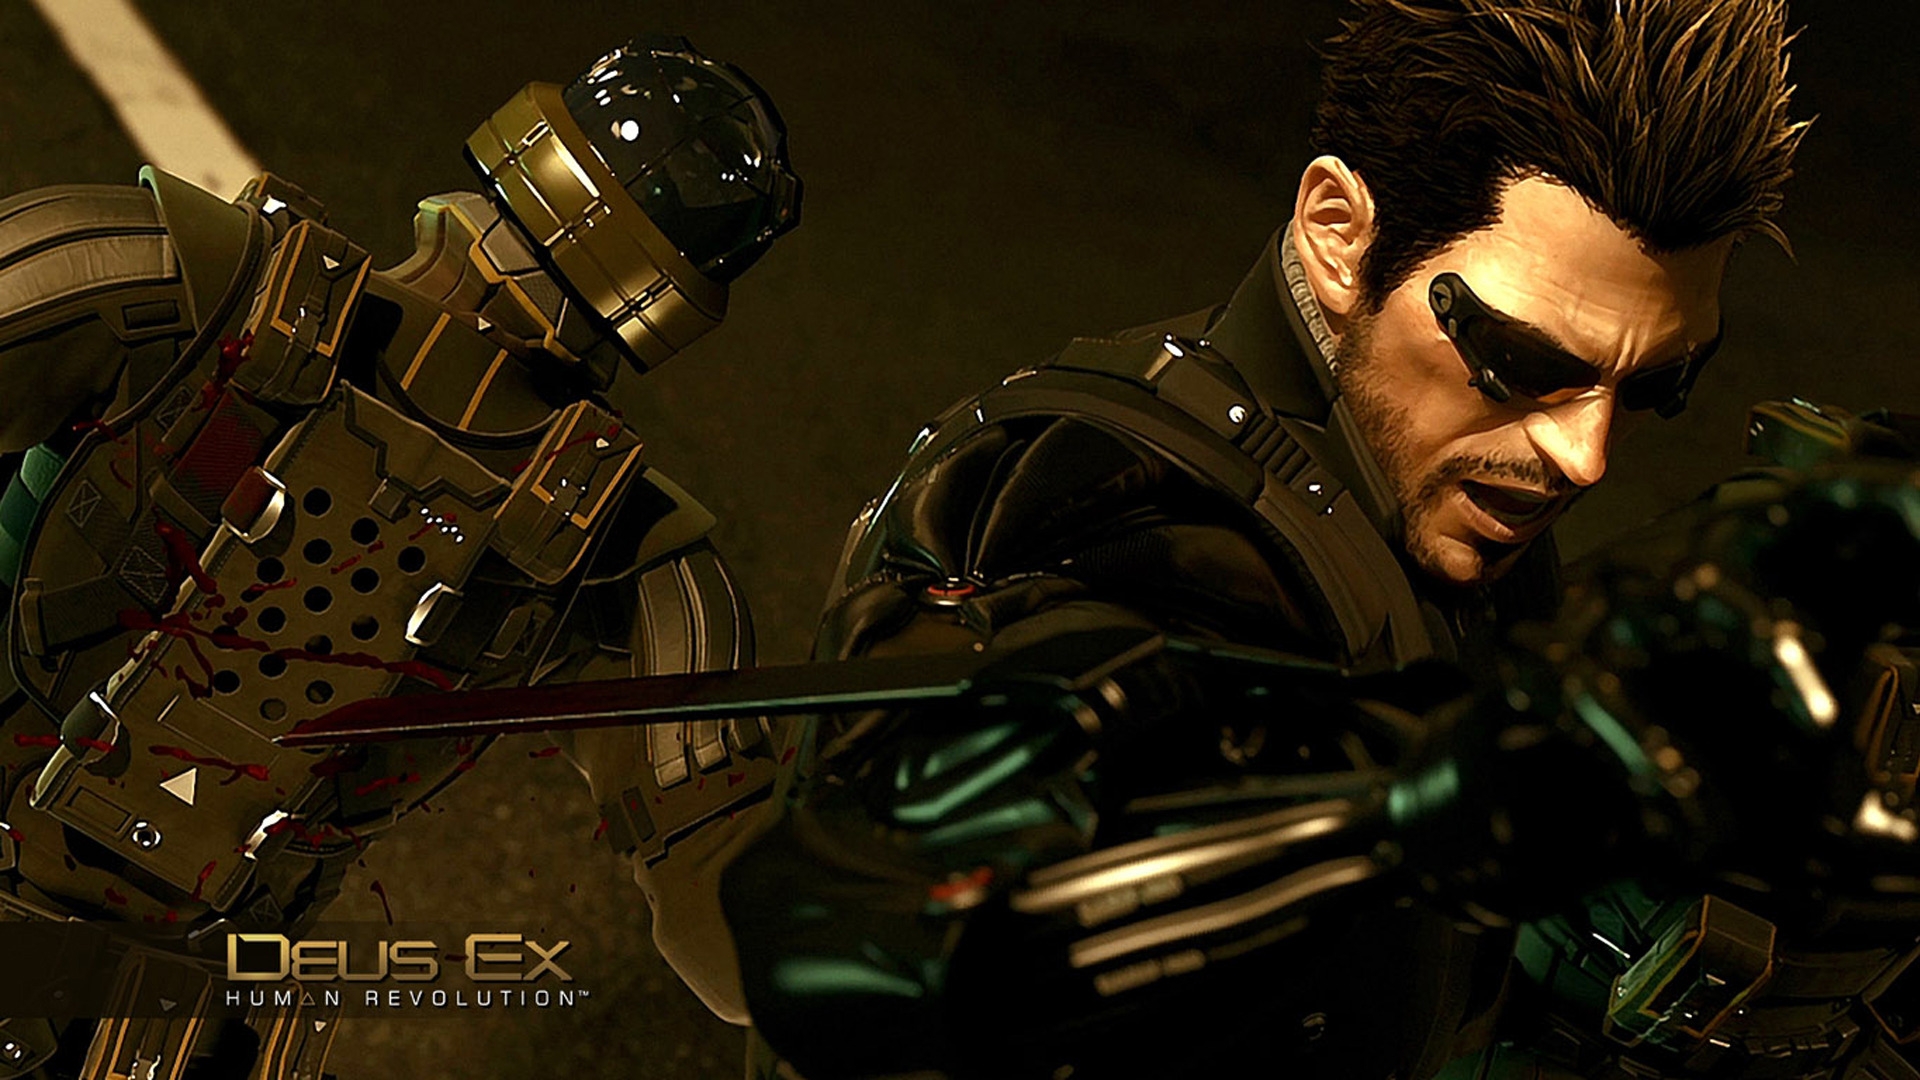 Deus Ex Human Revolution Poster for 1920 x 1080 HDTV 1080p resolution